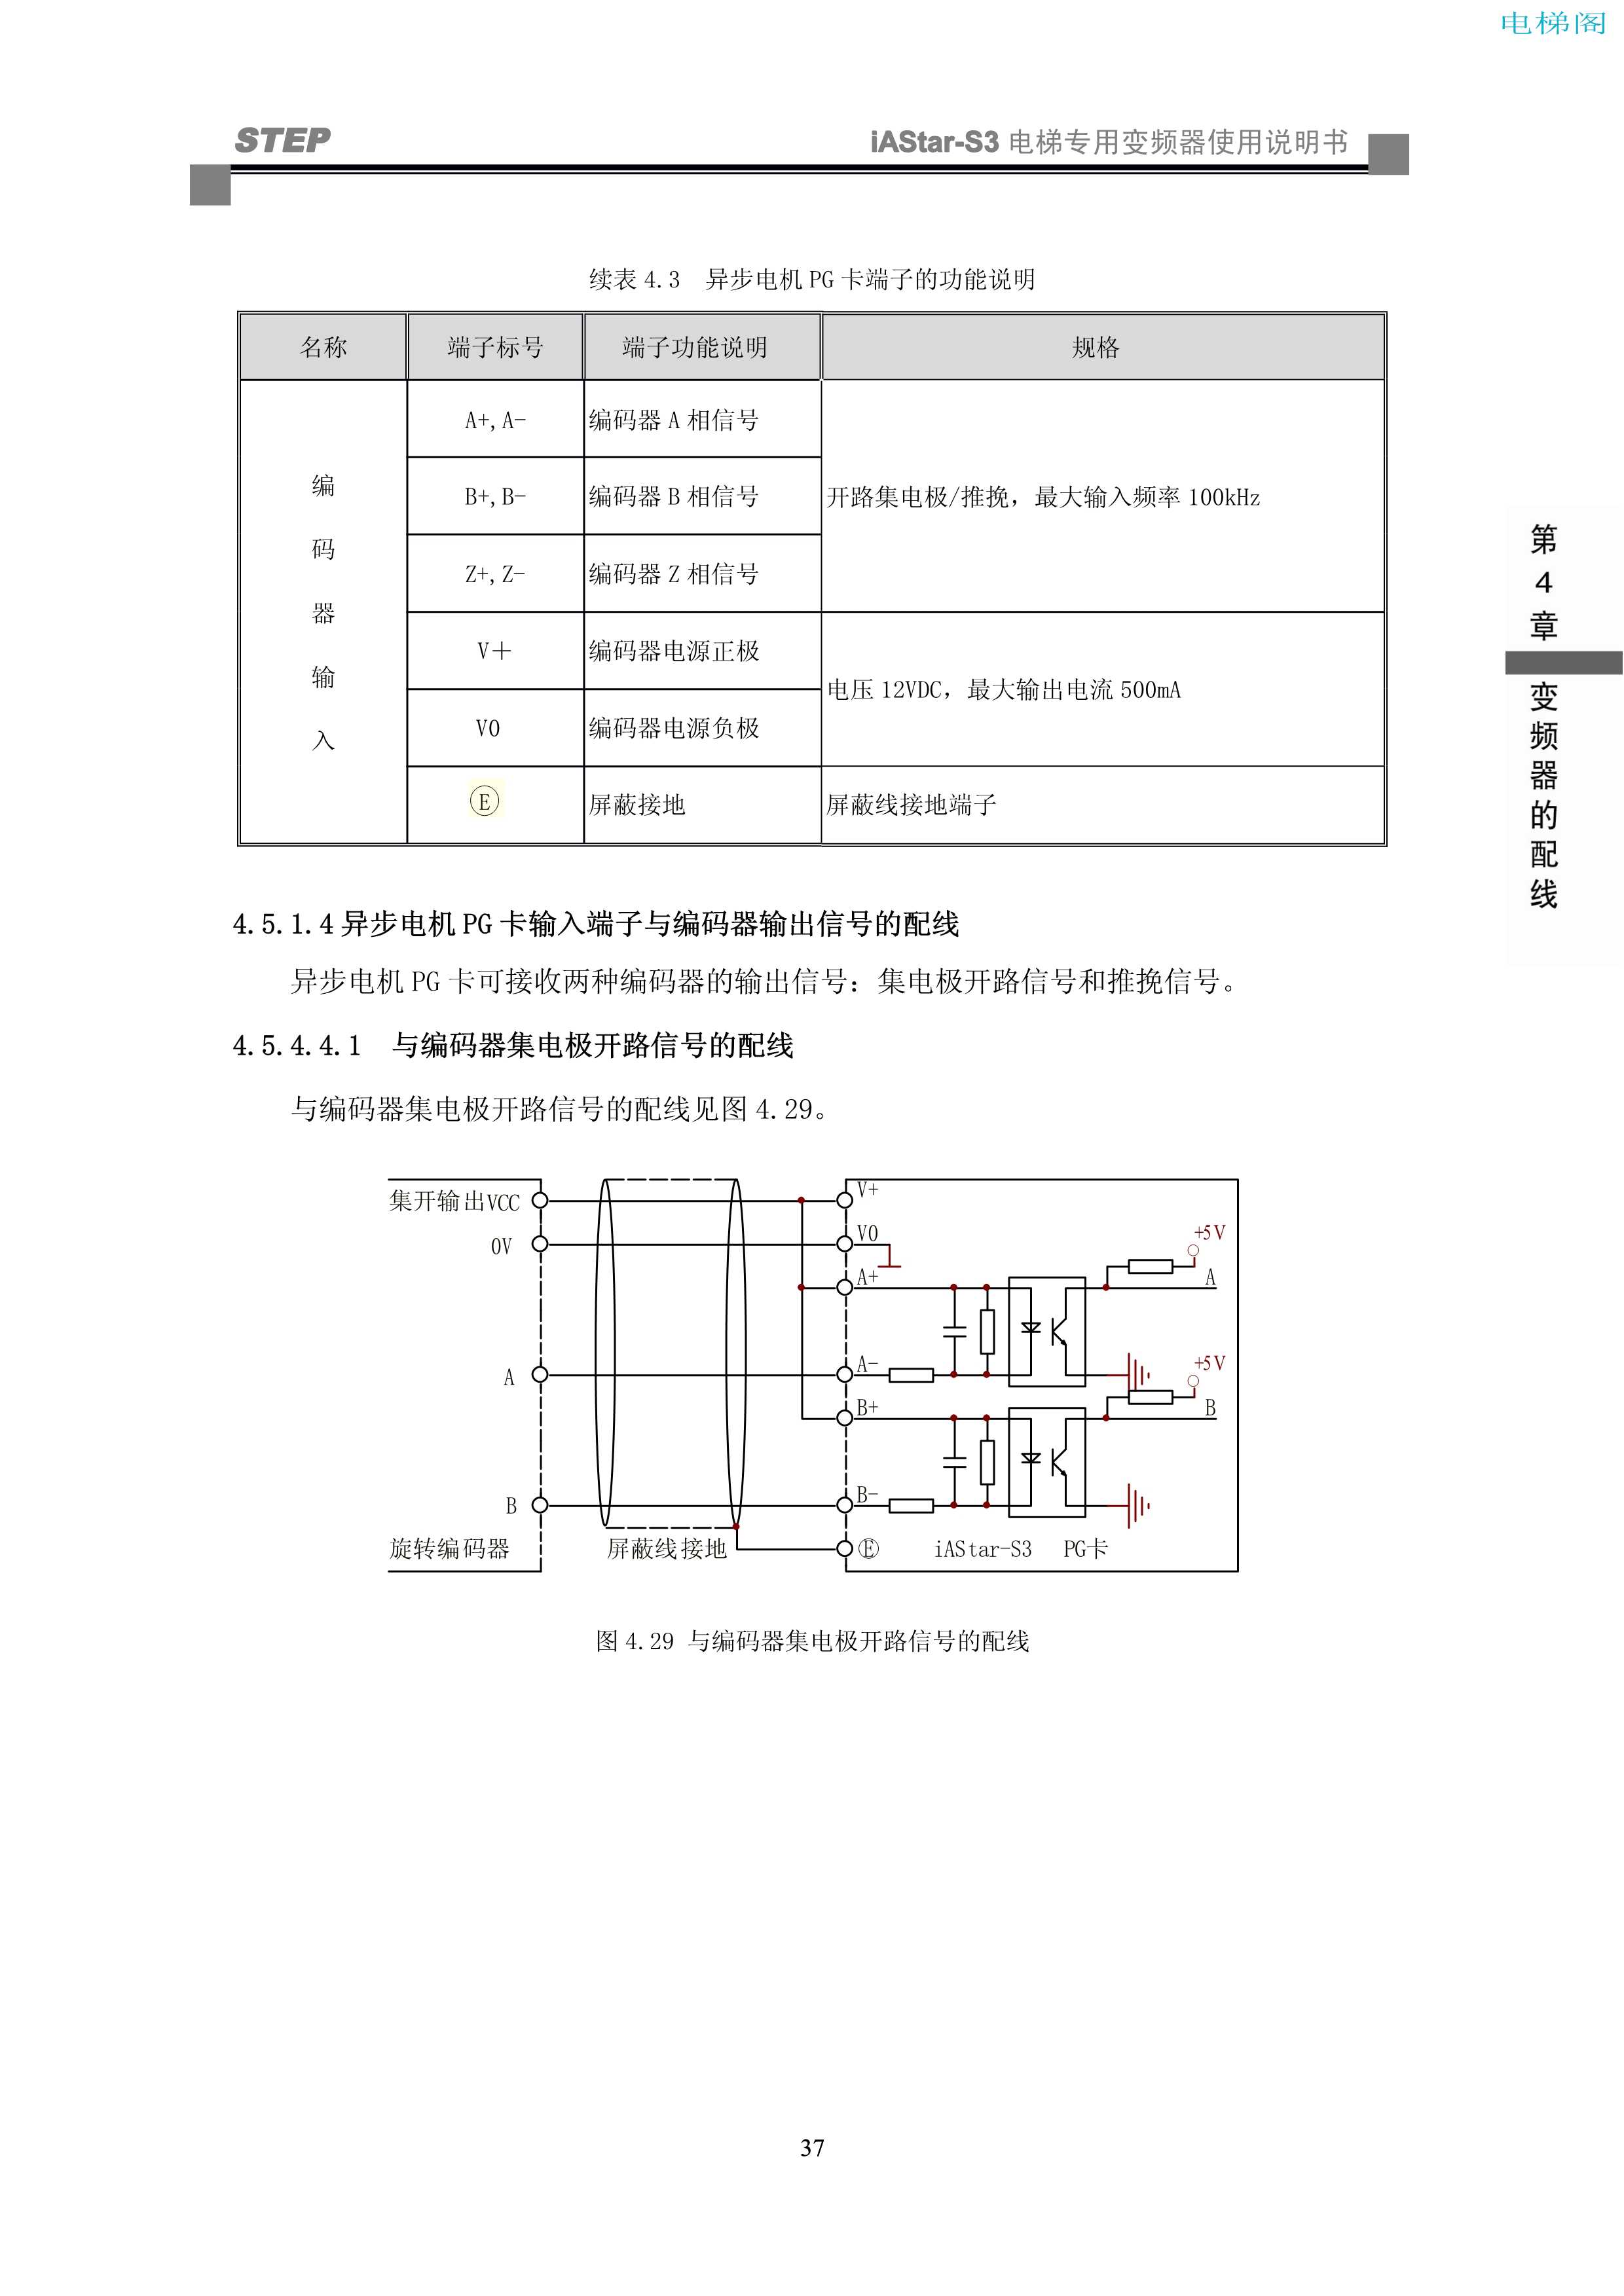 iAStar-S3系列电梯专用变频器使用说明书-9(V2[1].03)_45.jpg